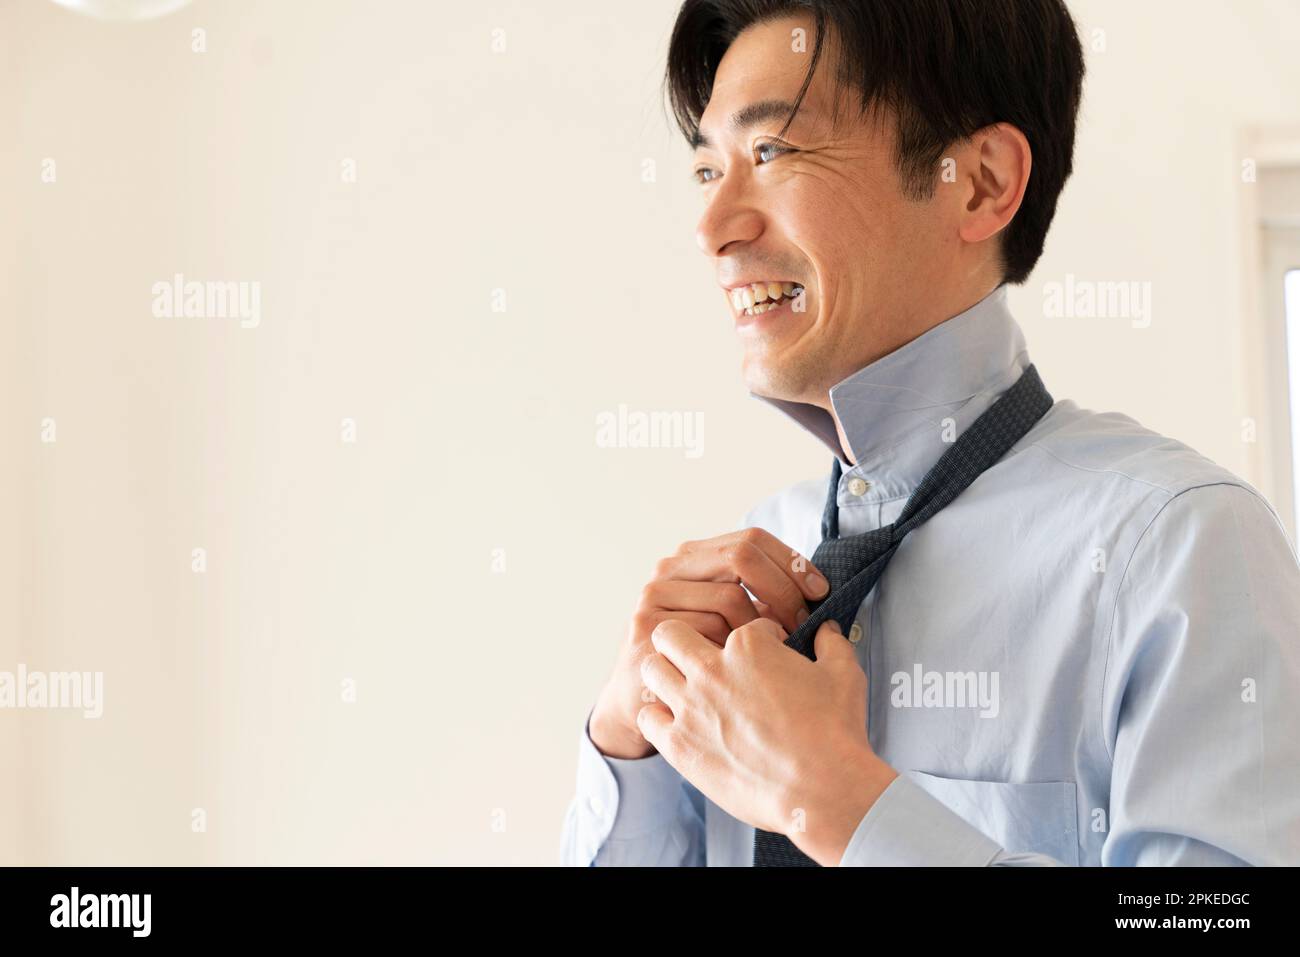 Man wearing shirt and tie Stock Photo